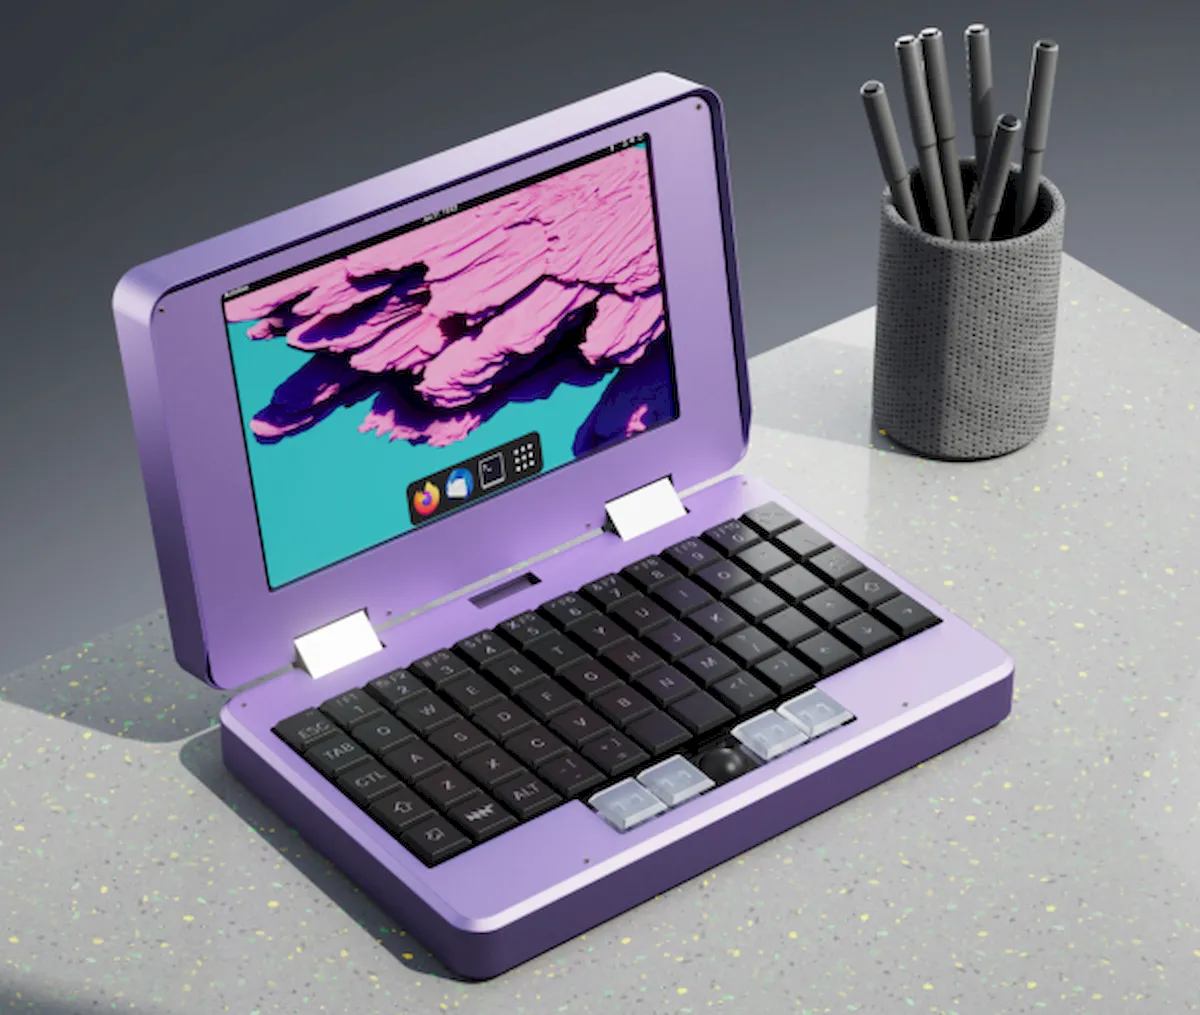 MNT Pocket Reform, um mini laptop com hardware e software aberto